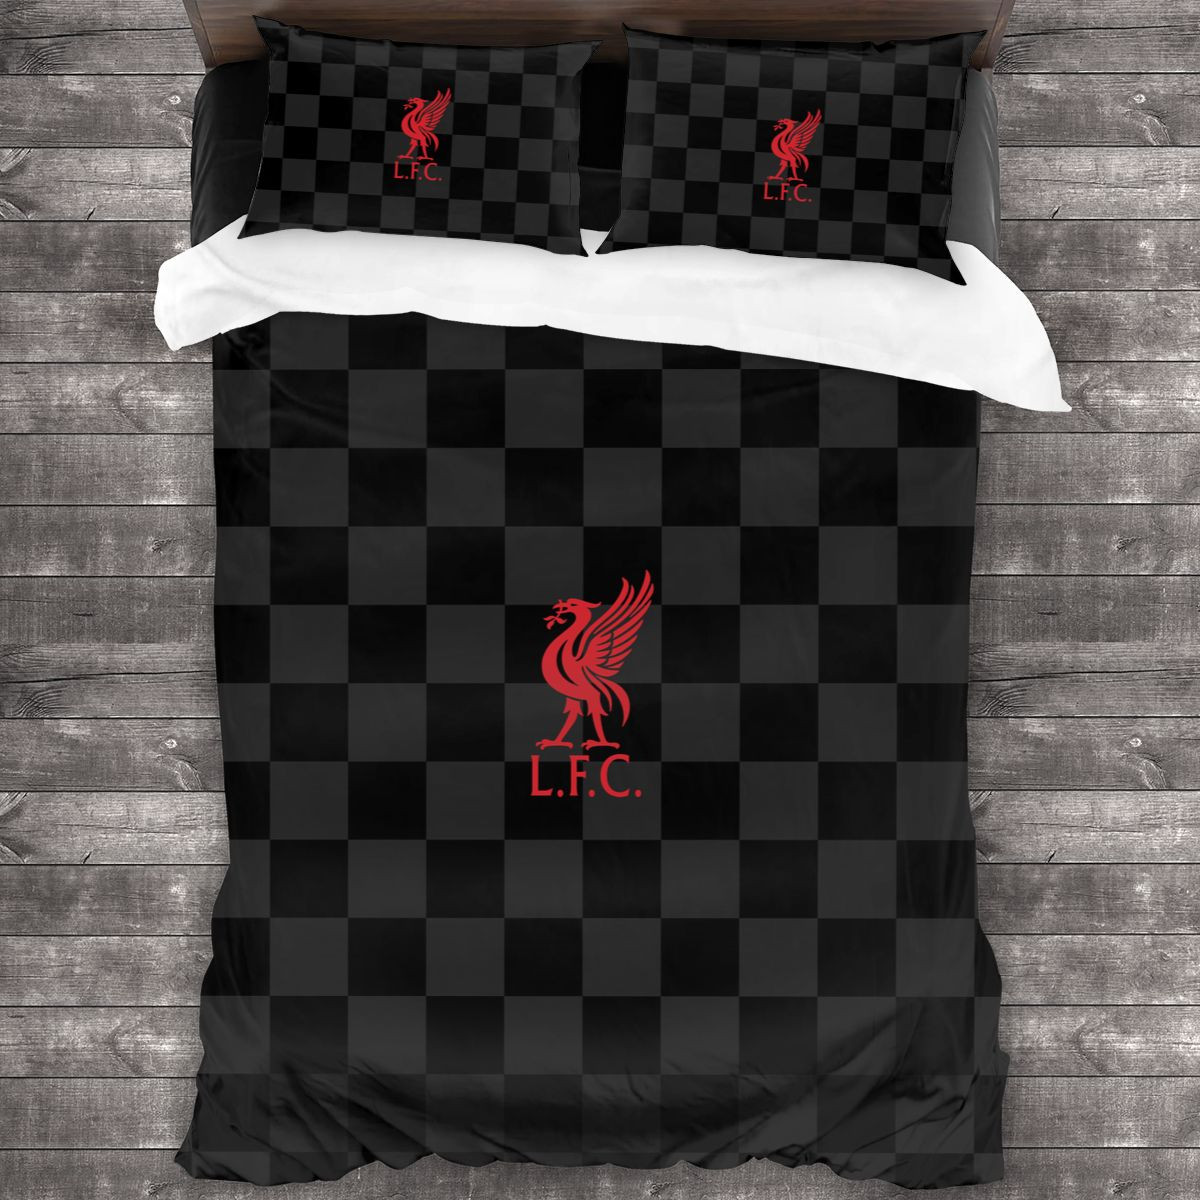 Liverpool Football Club LFC 13 Duvet Cover Set - Bedding Set